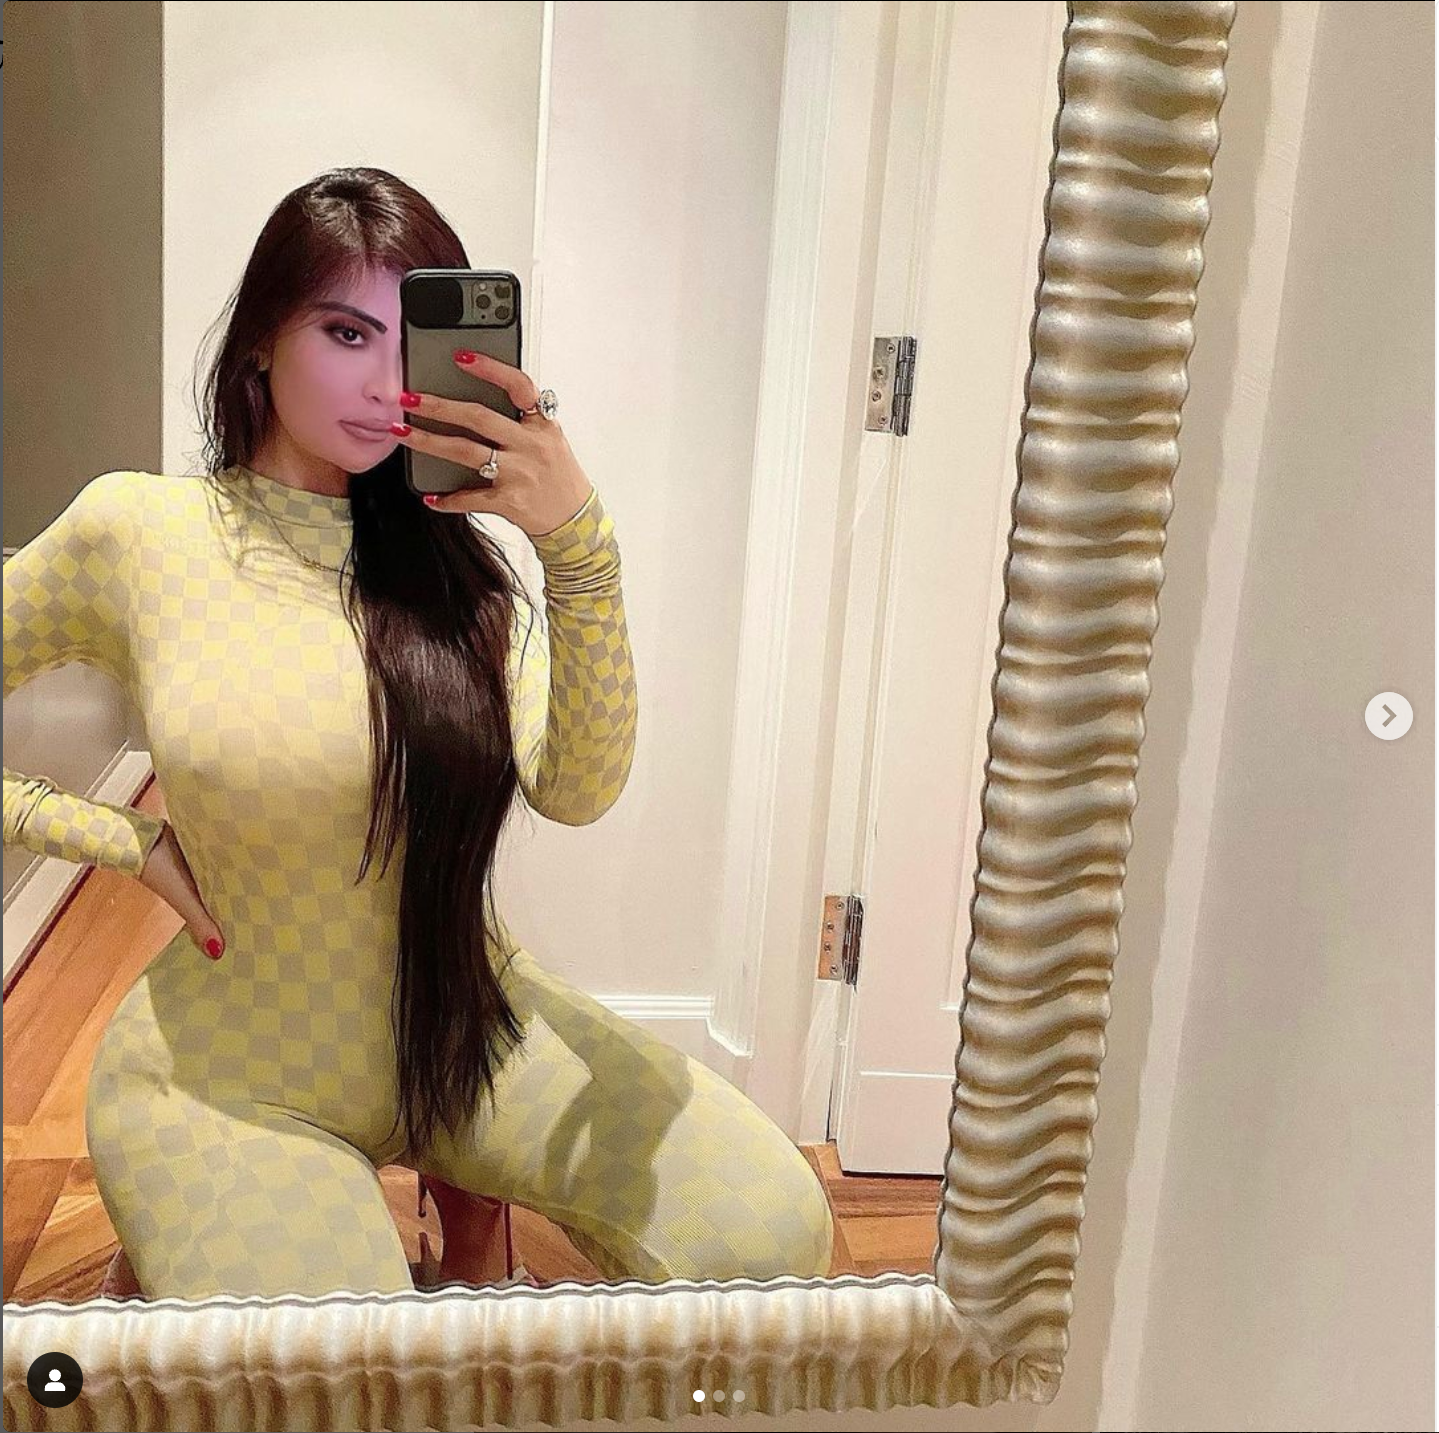 Post Surgery Kim Kardashian Look Alike Sick Of The Comparisons, Working On Reversing Procedures